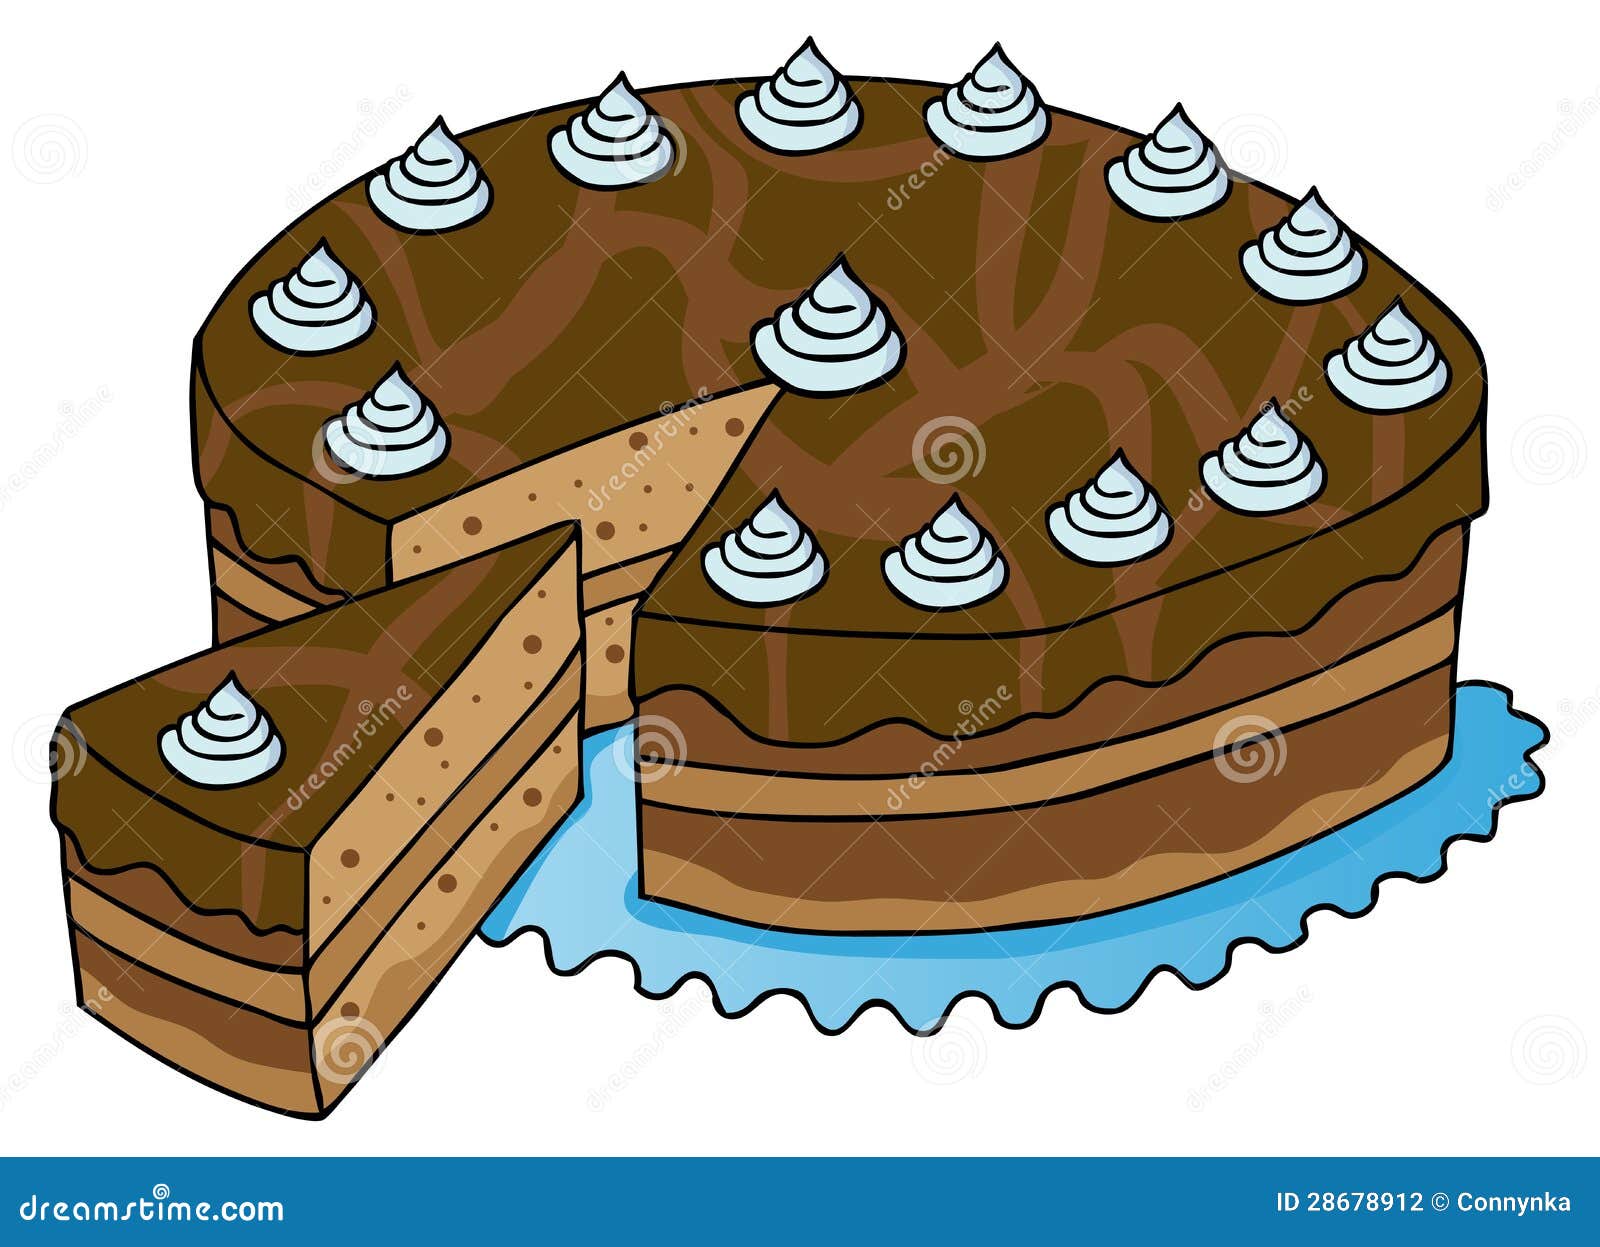 Sliced chocolate cake stock vector. Illustration of fresh - 28678912